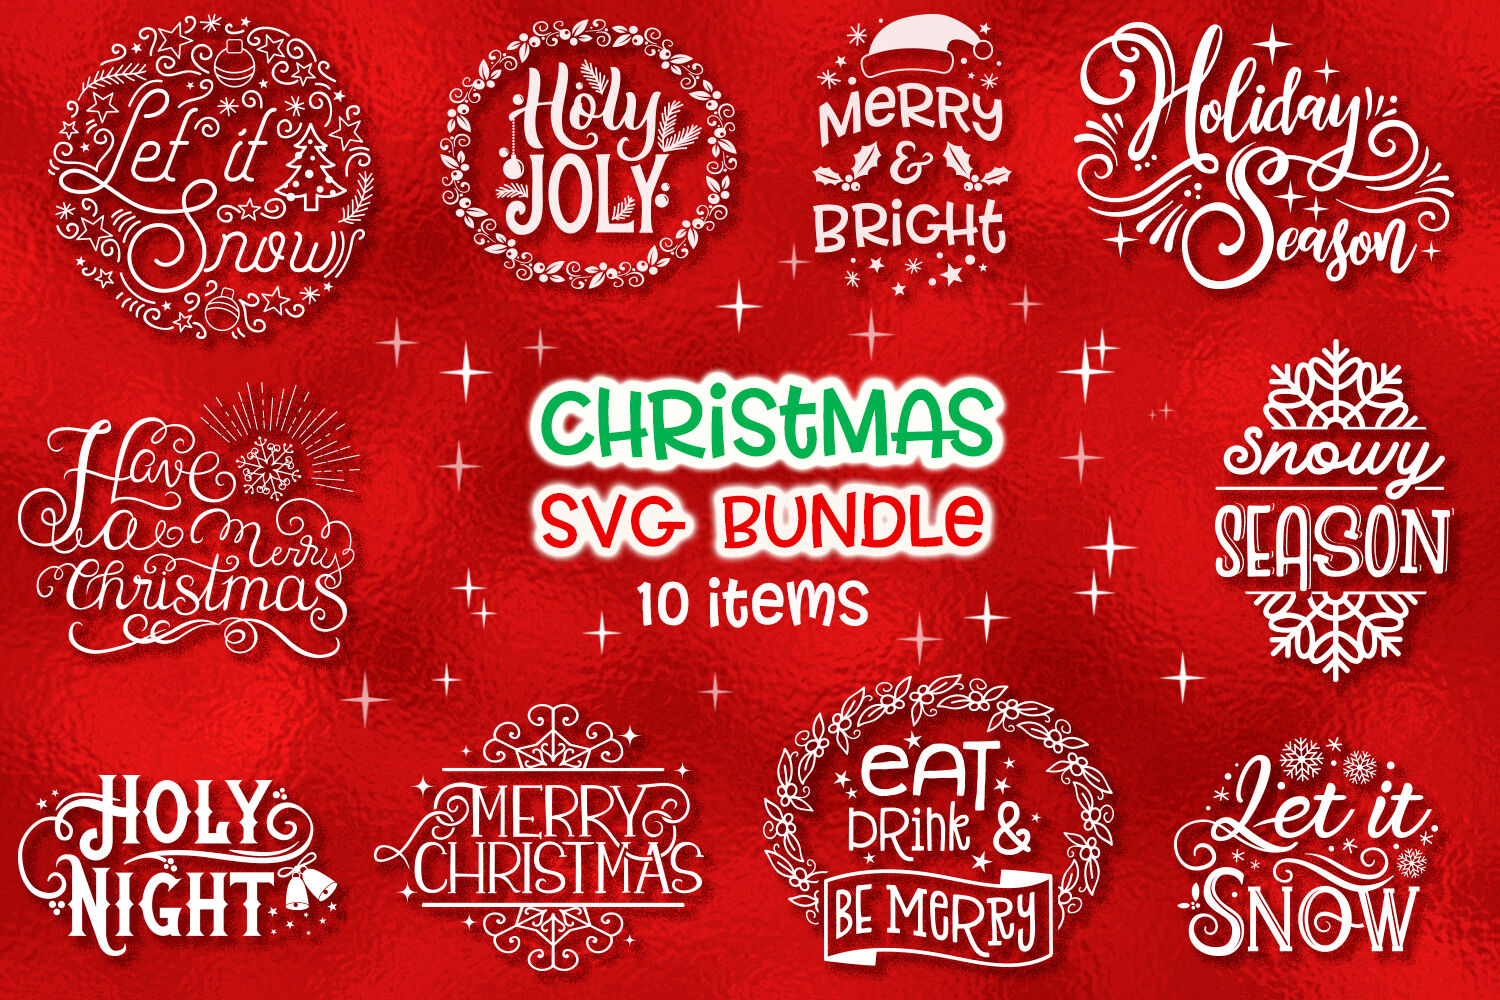 Christmas SVG Bundle - 10 items By Tatiana Cociorva Designs